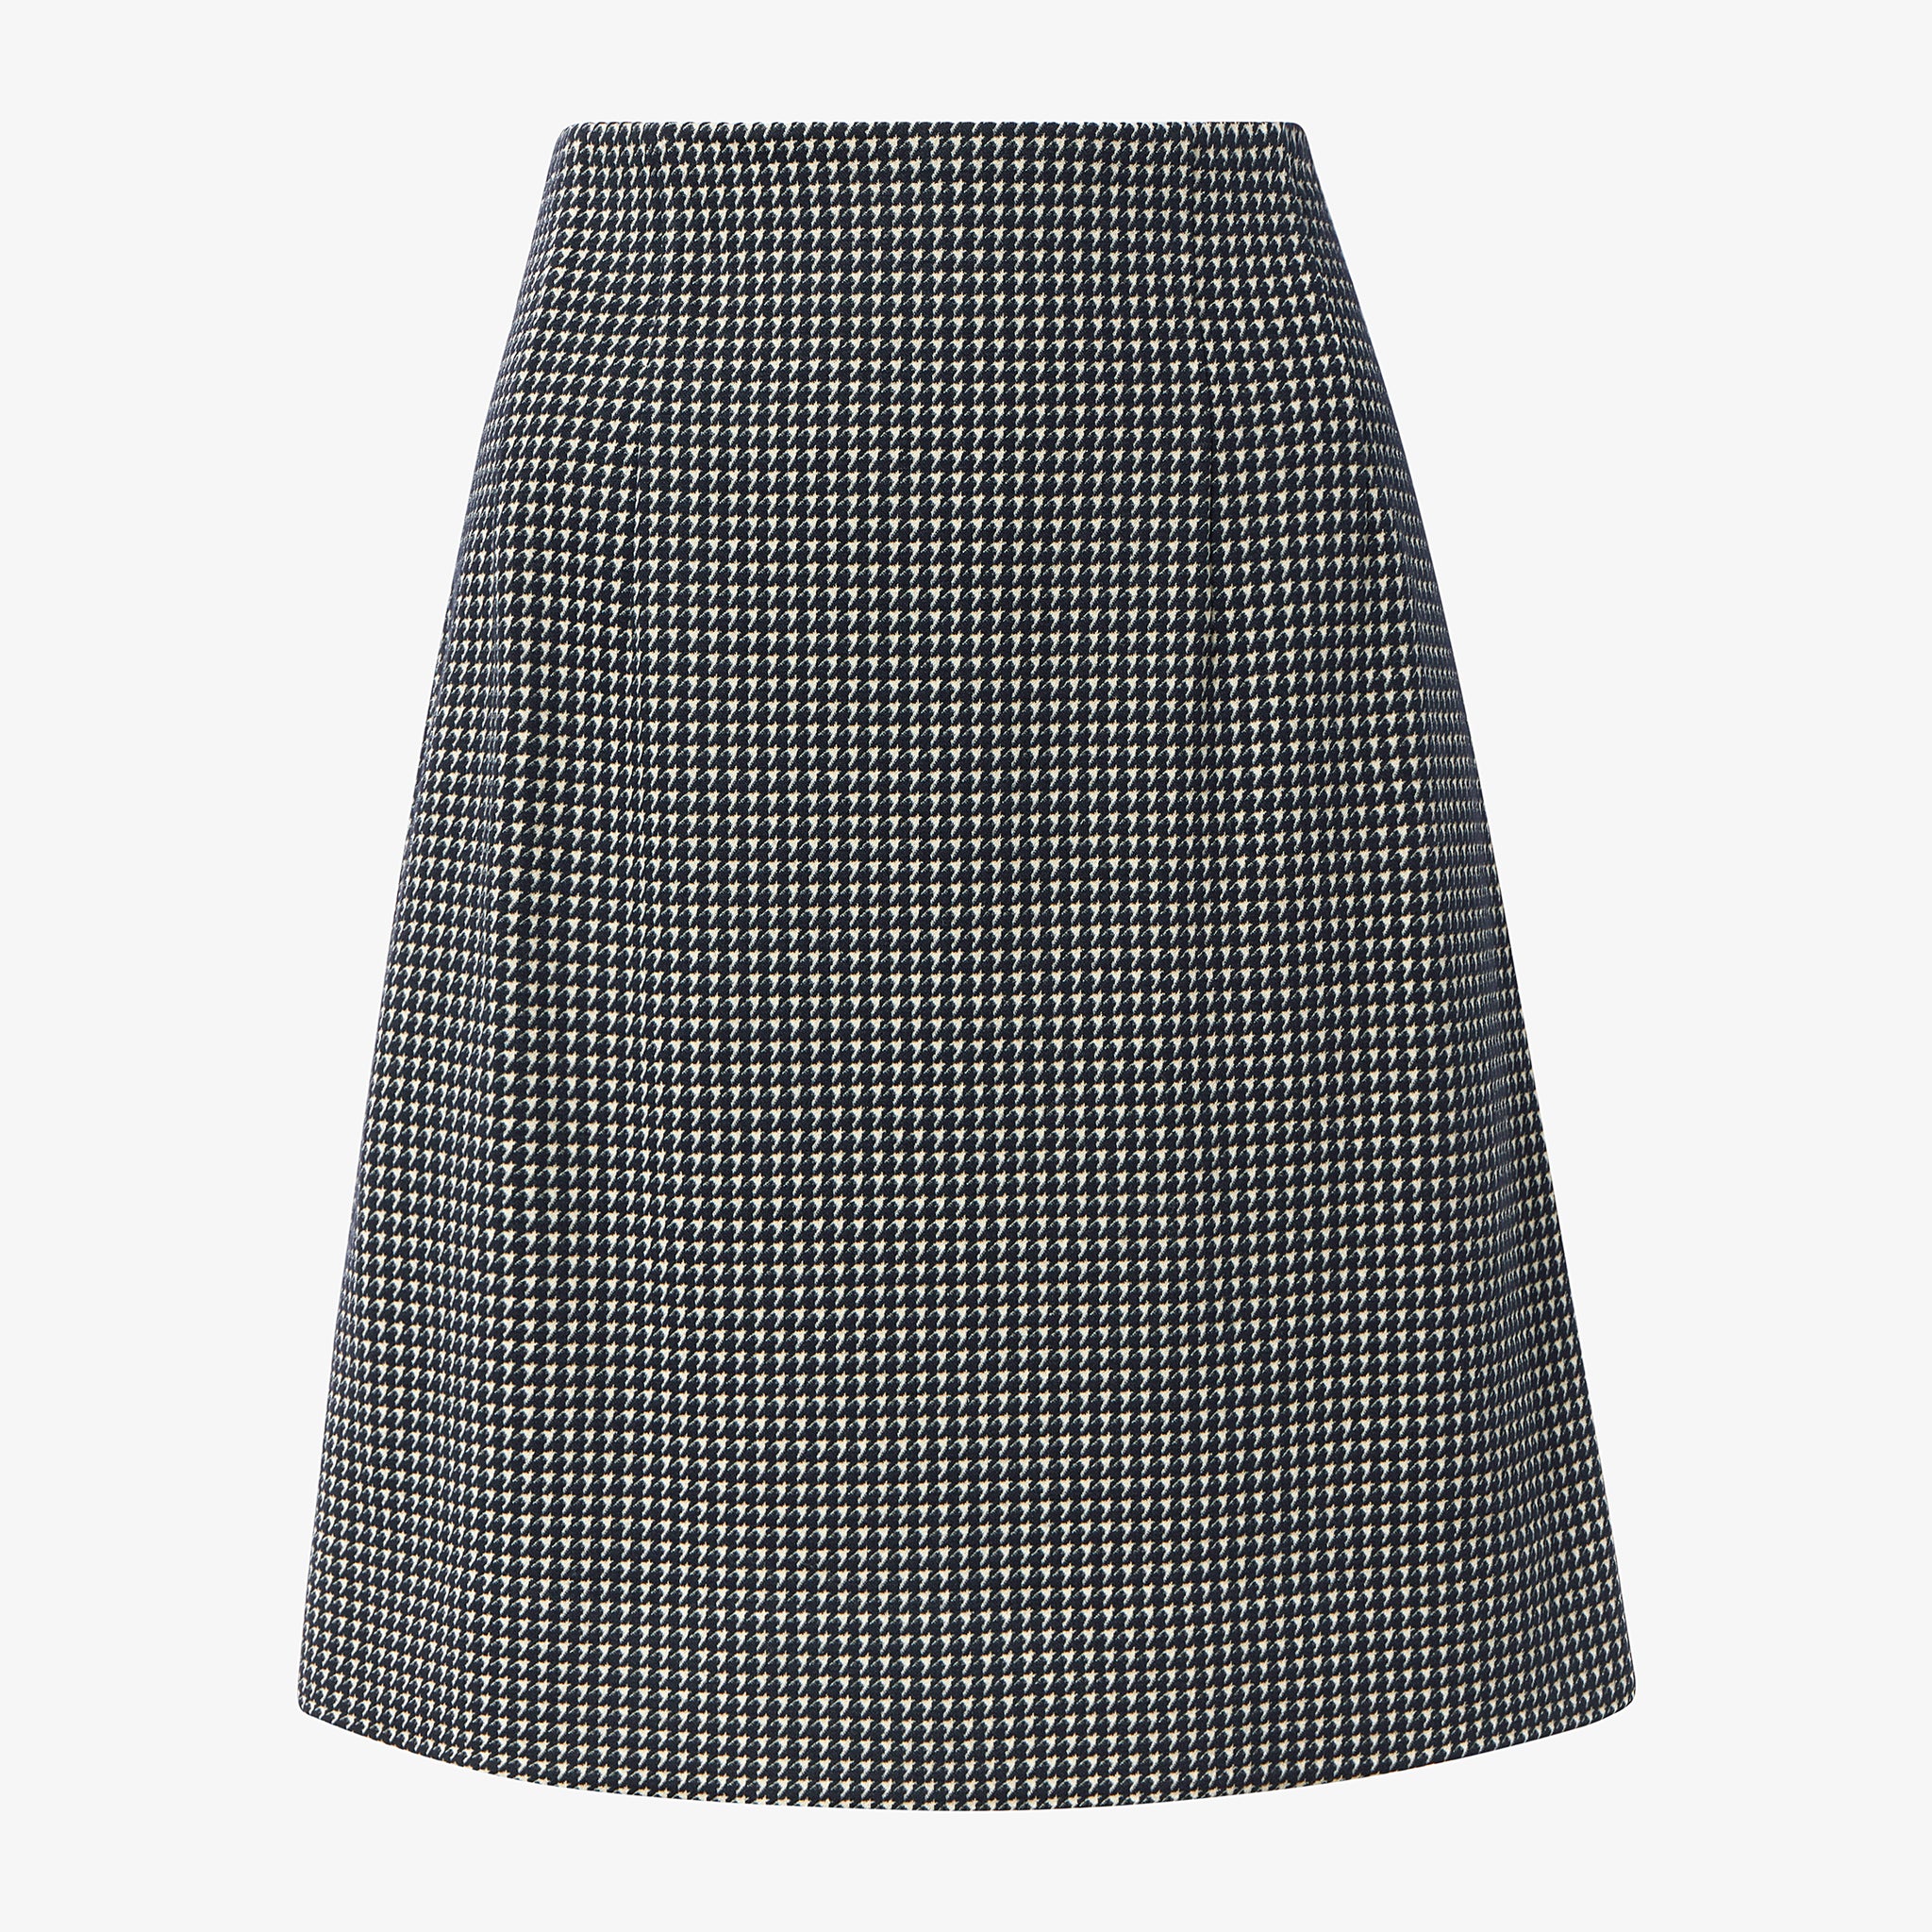 Packshot image of the whitney skirt in black and white